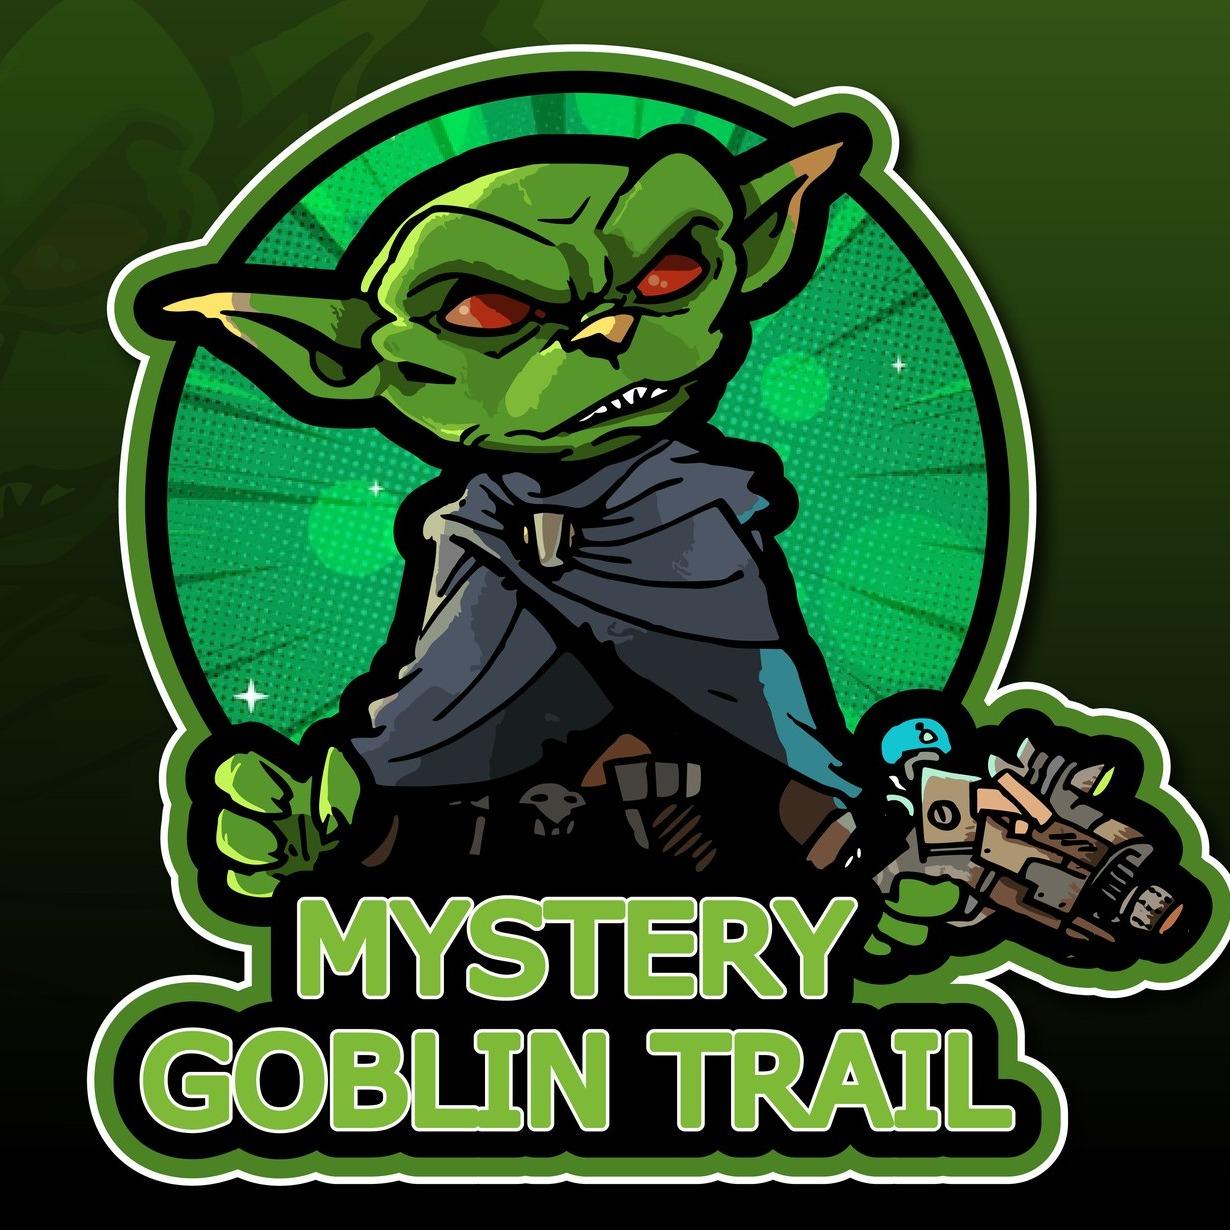 Mystery goblin trail